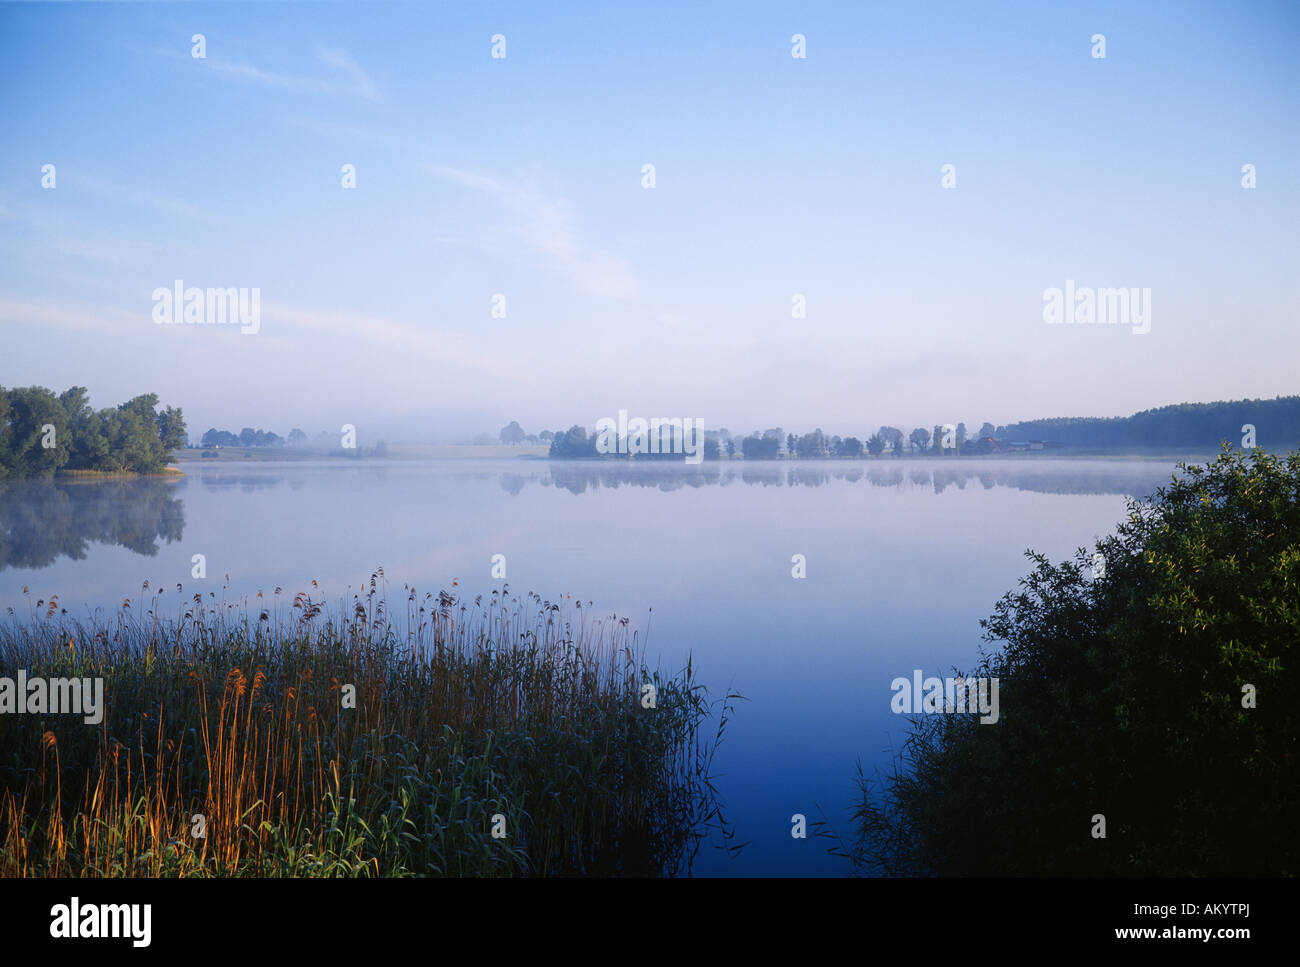 Misty dawn over the masurian lake Kolmowo in Poland. Morgenlicht über dem Kolmowo See in Masuren. Stock Photo